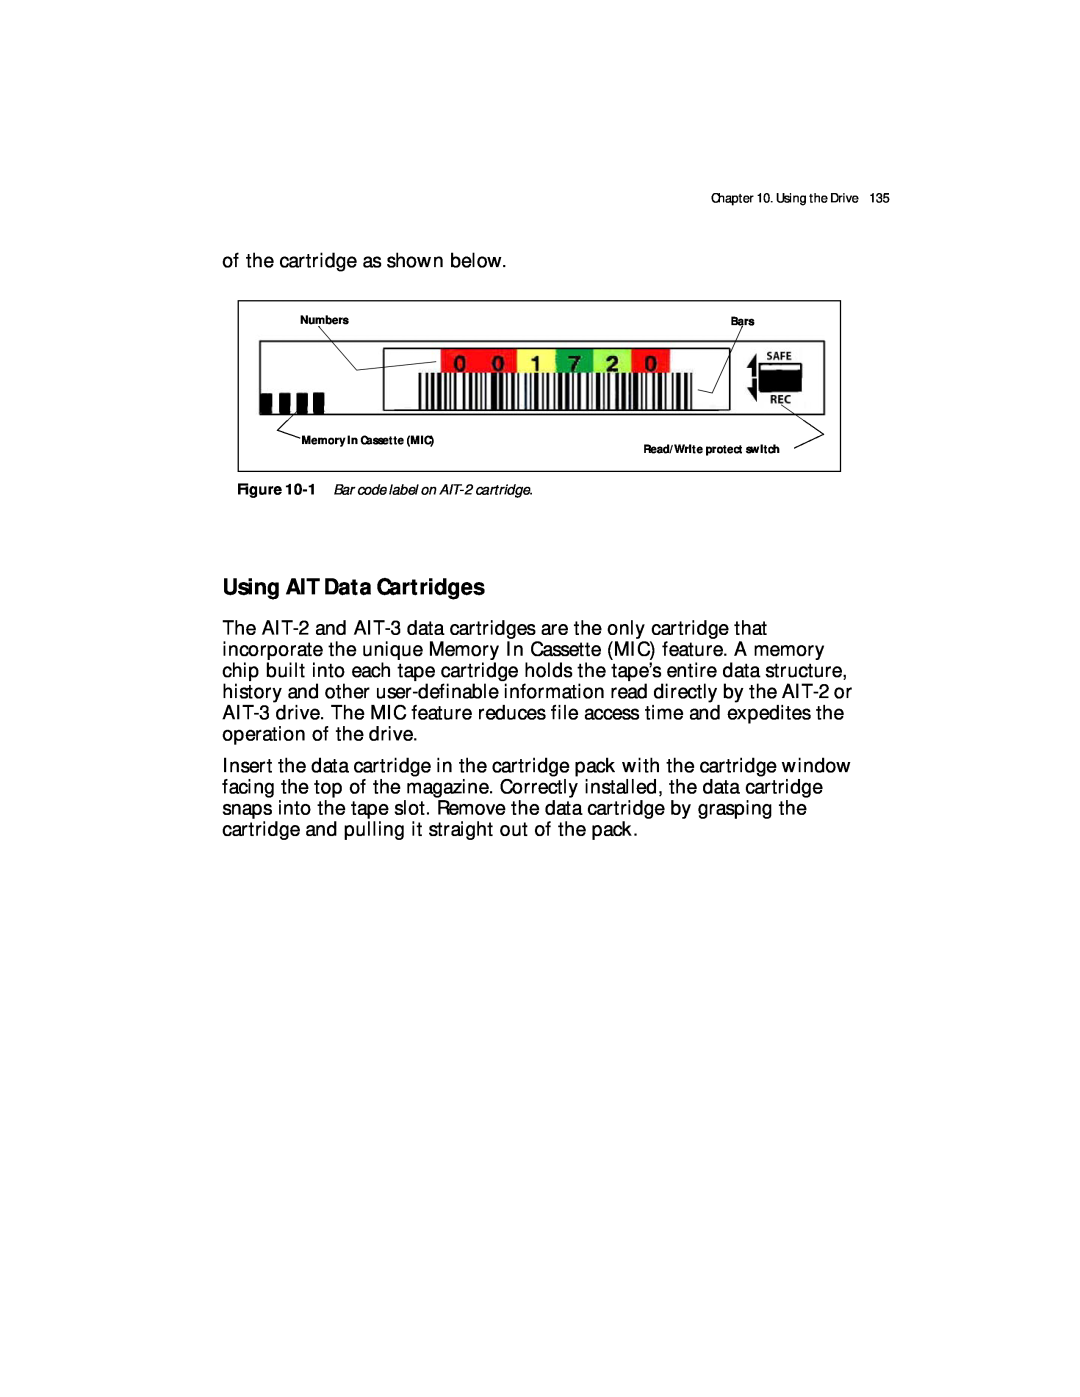 Spectra Logic Spectra 12000 manual Using AIT Data Cartridges, 1 Bar code label on AIT-2 cartridge 